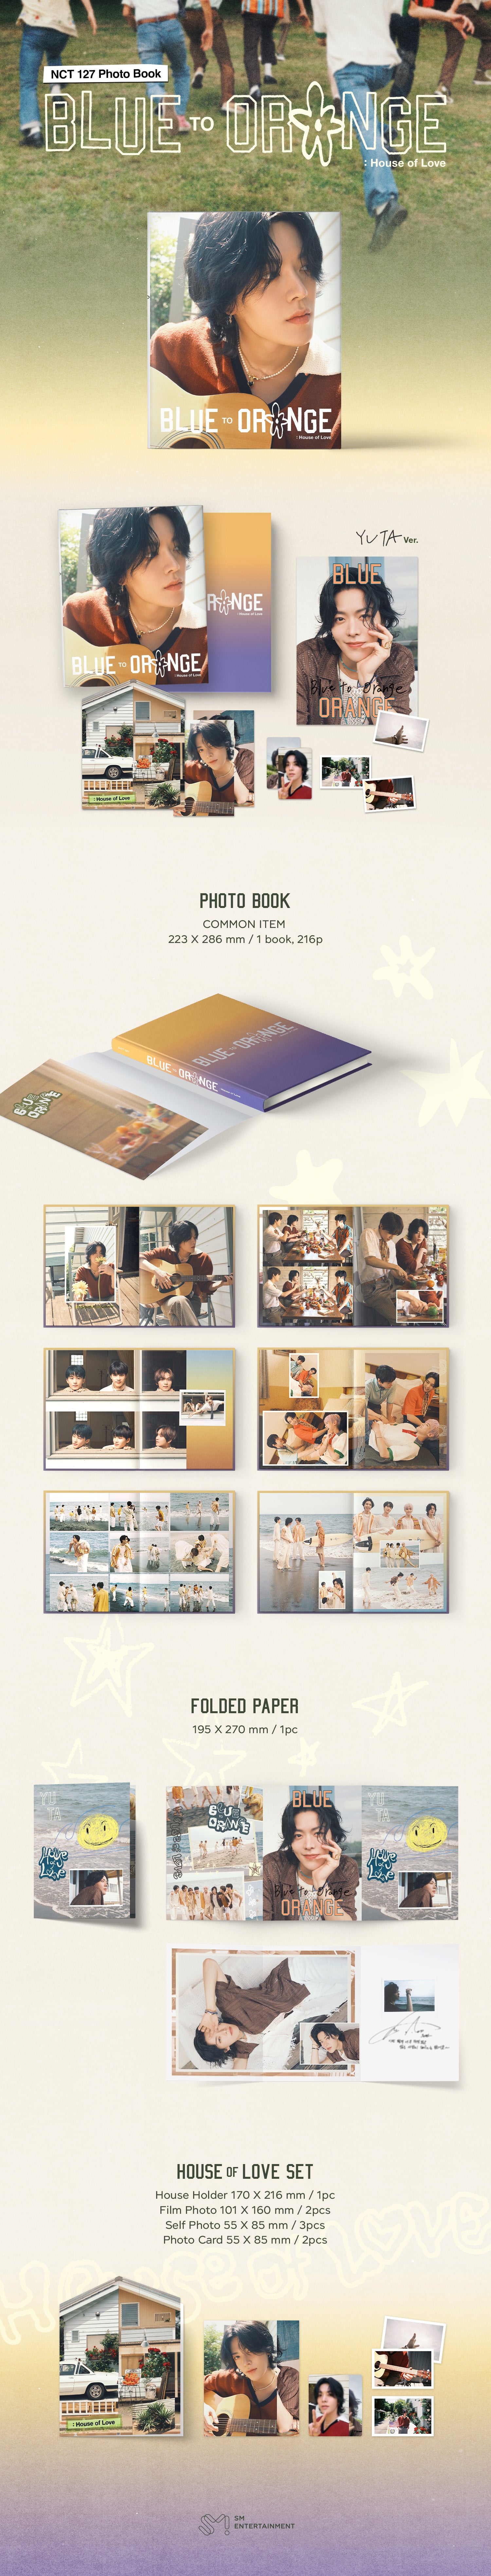 NCT 127 PHOTOBOOK 'BLUE TO ORANGE : HOUSE OF LOVE' YUTA VERSION DETAIL